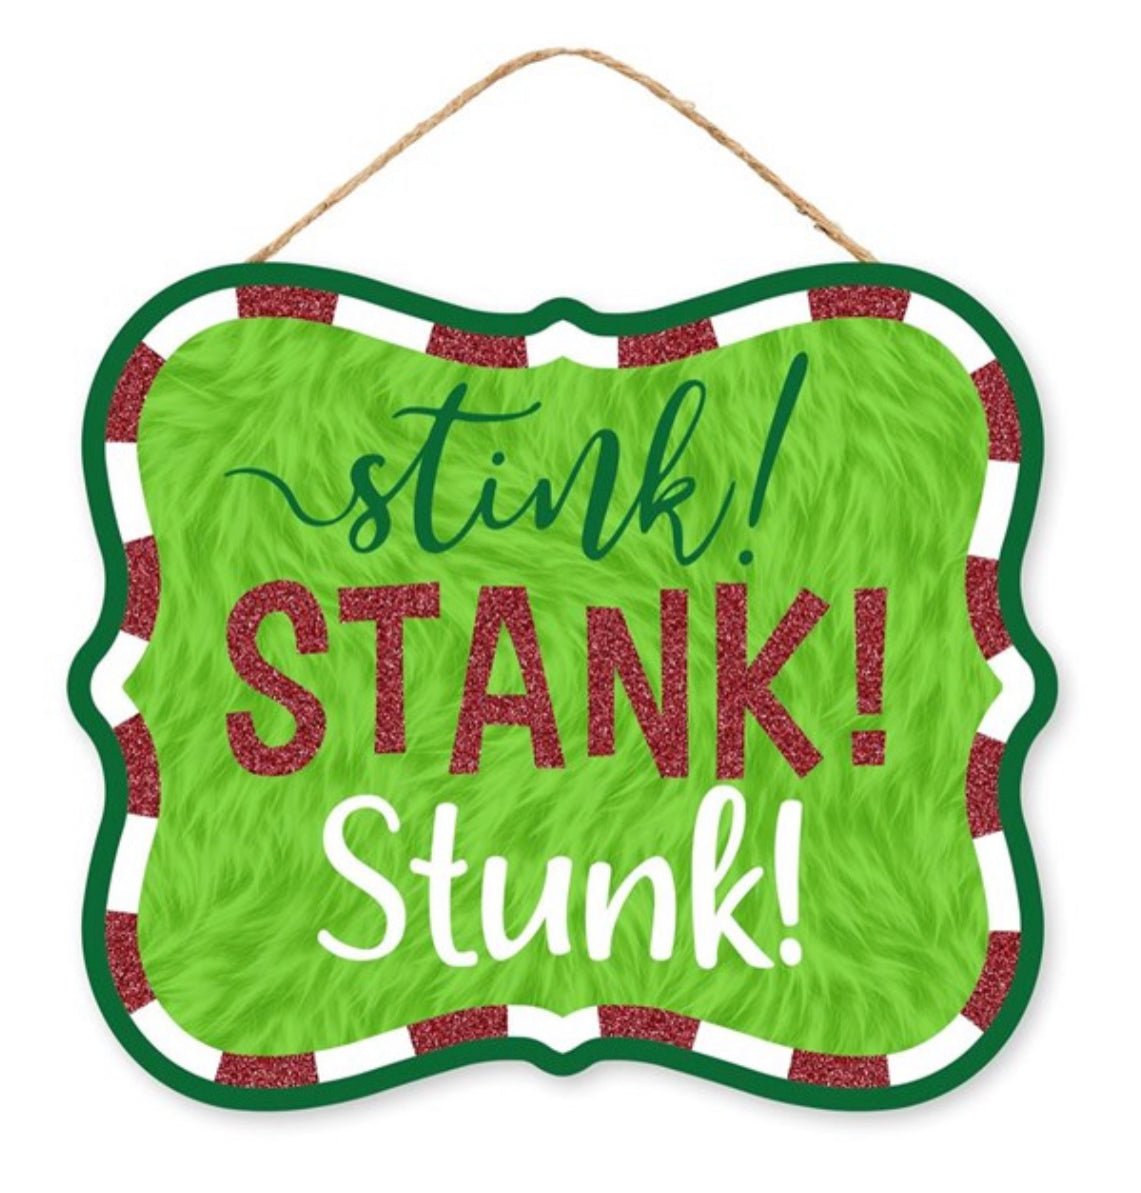 Green monster sign - stink stank stunk - Greenery Market AP8977